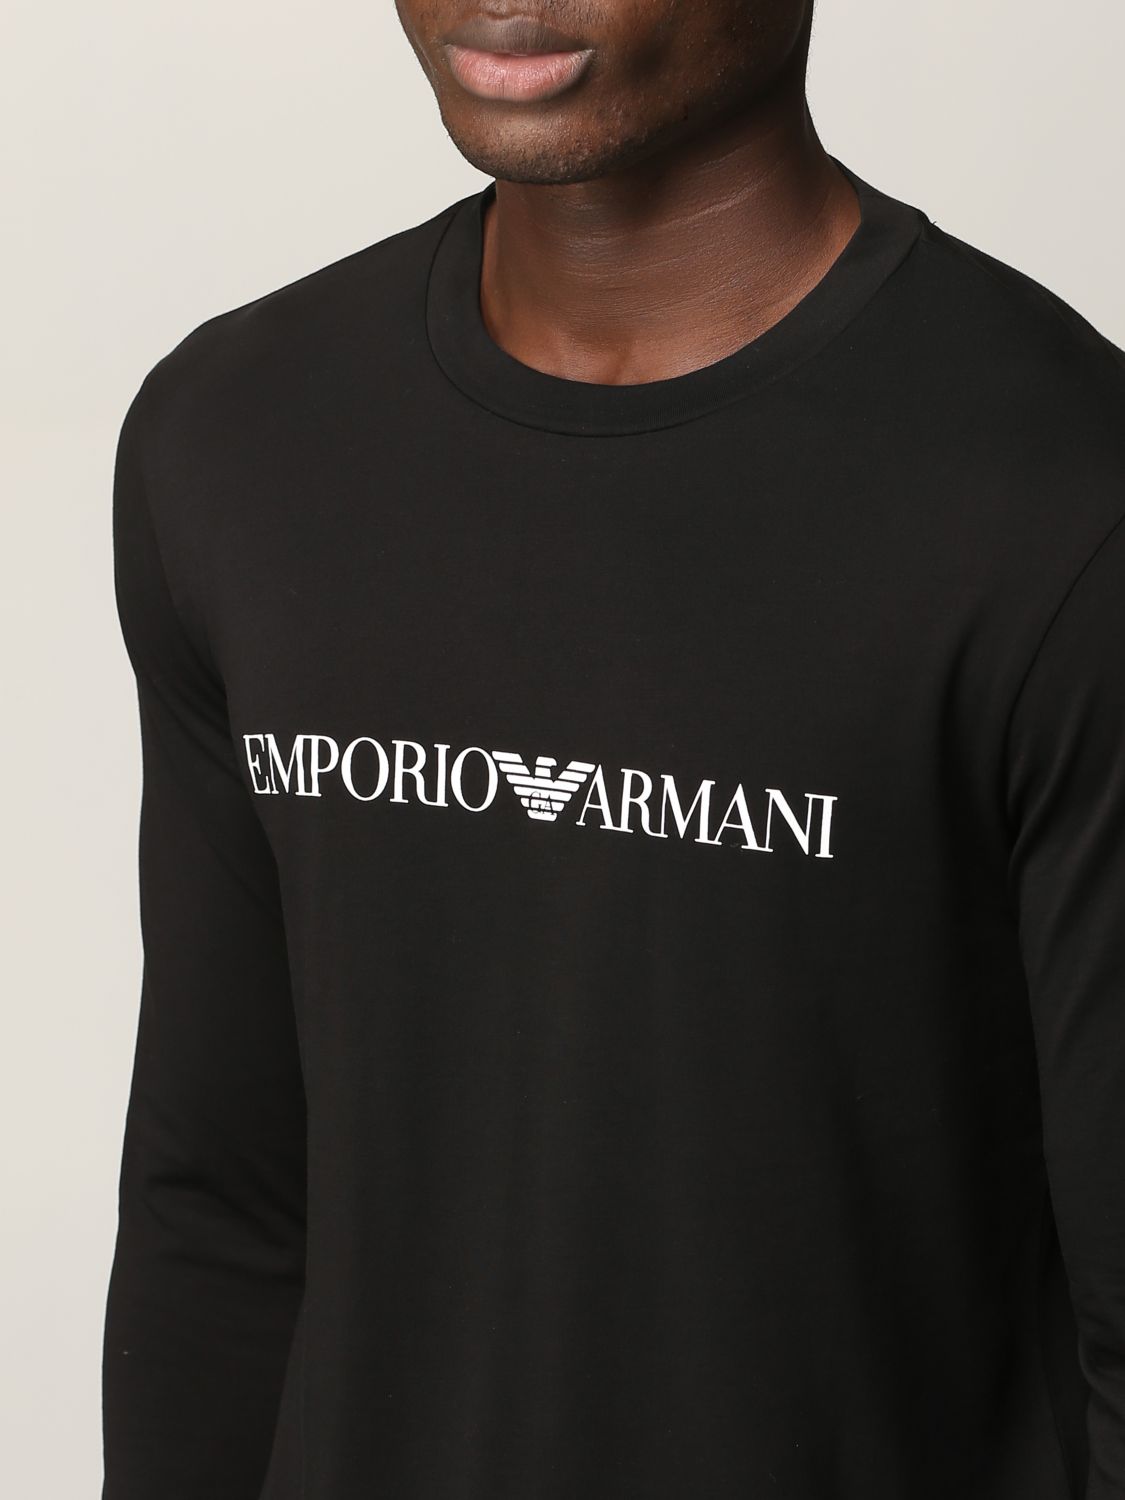 T-shirt Emporio Armani: T-shirt homme Emporio Armani noir 1 3